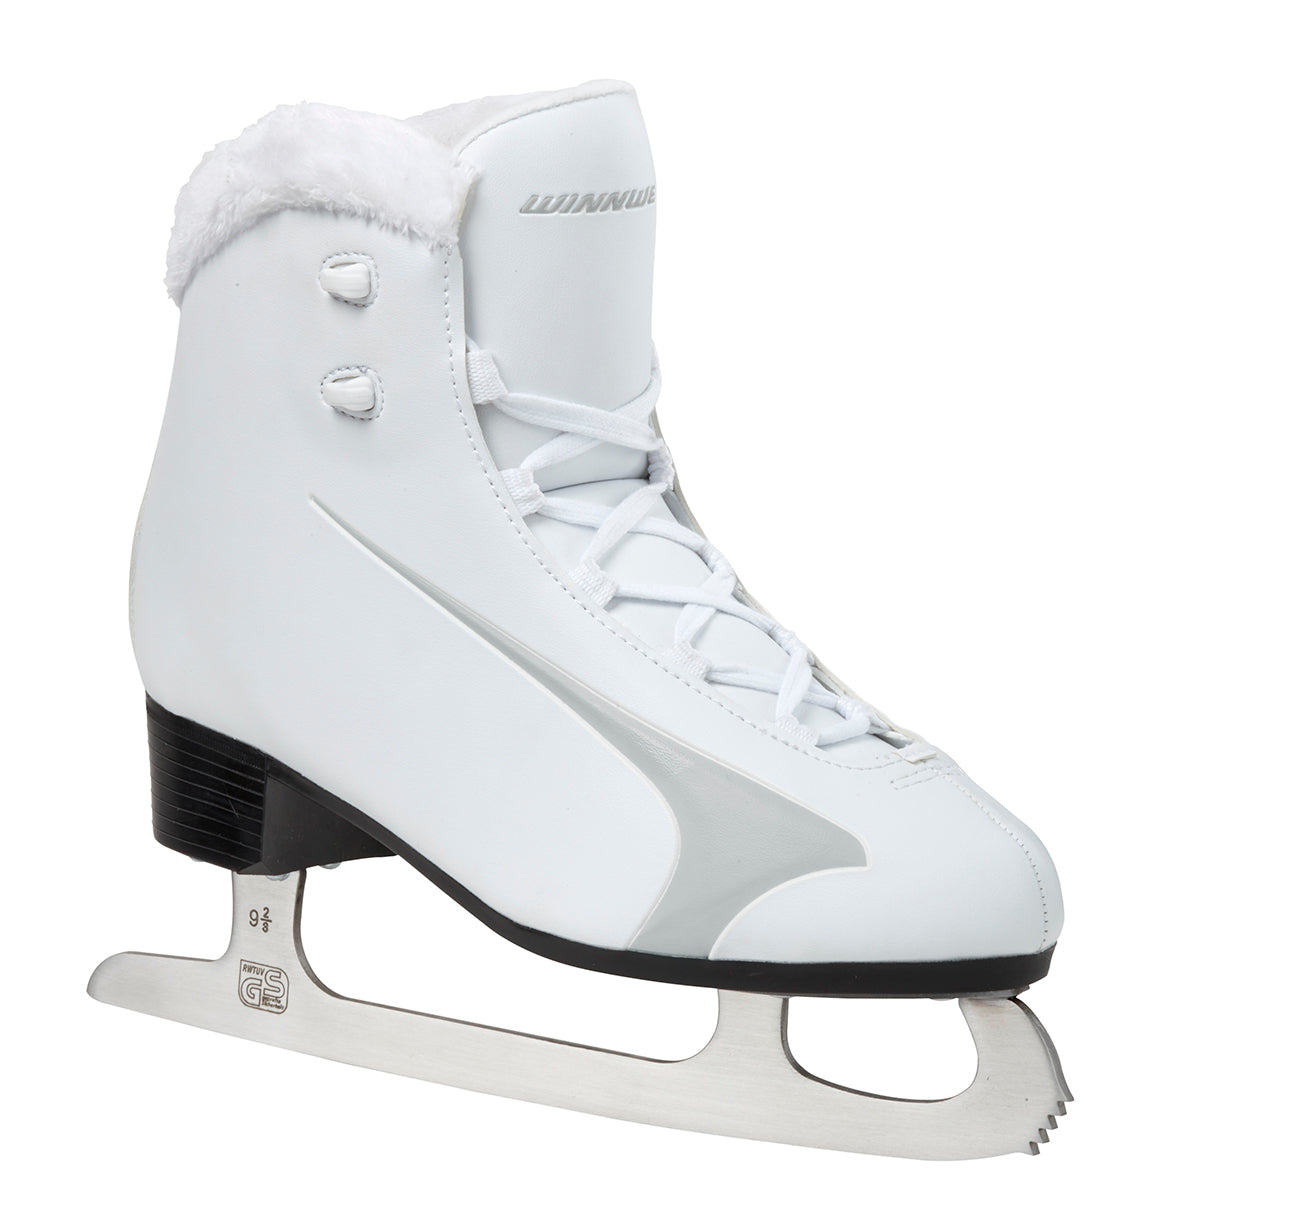 Winnwell Figure Ice Skates with Fur Collar White New Sizes 6-11